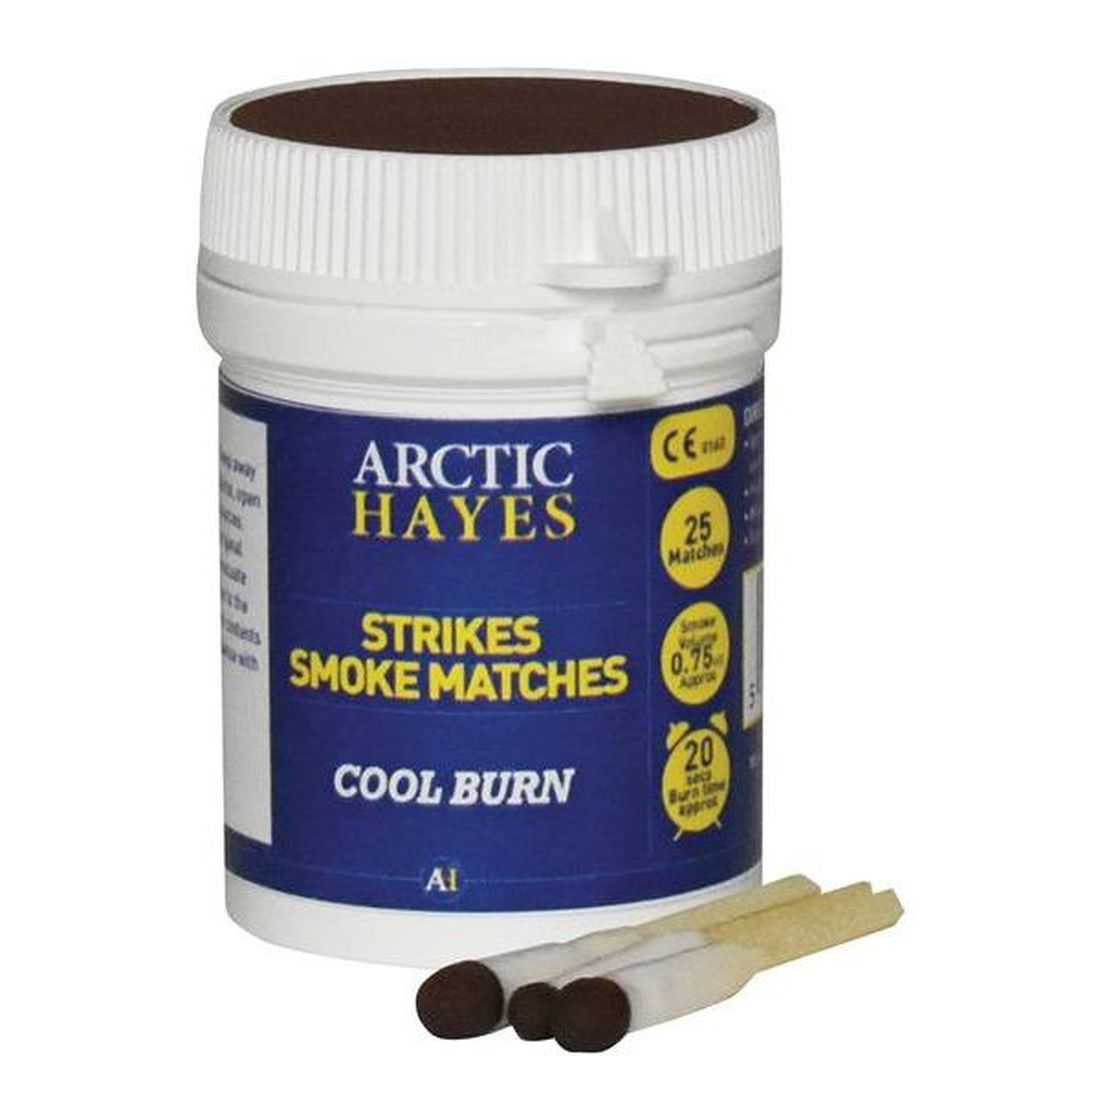 Arctic Hayes Strikes' Smoke Matches (Tub 25)  